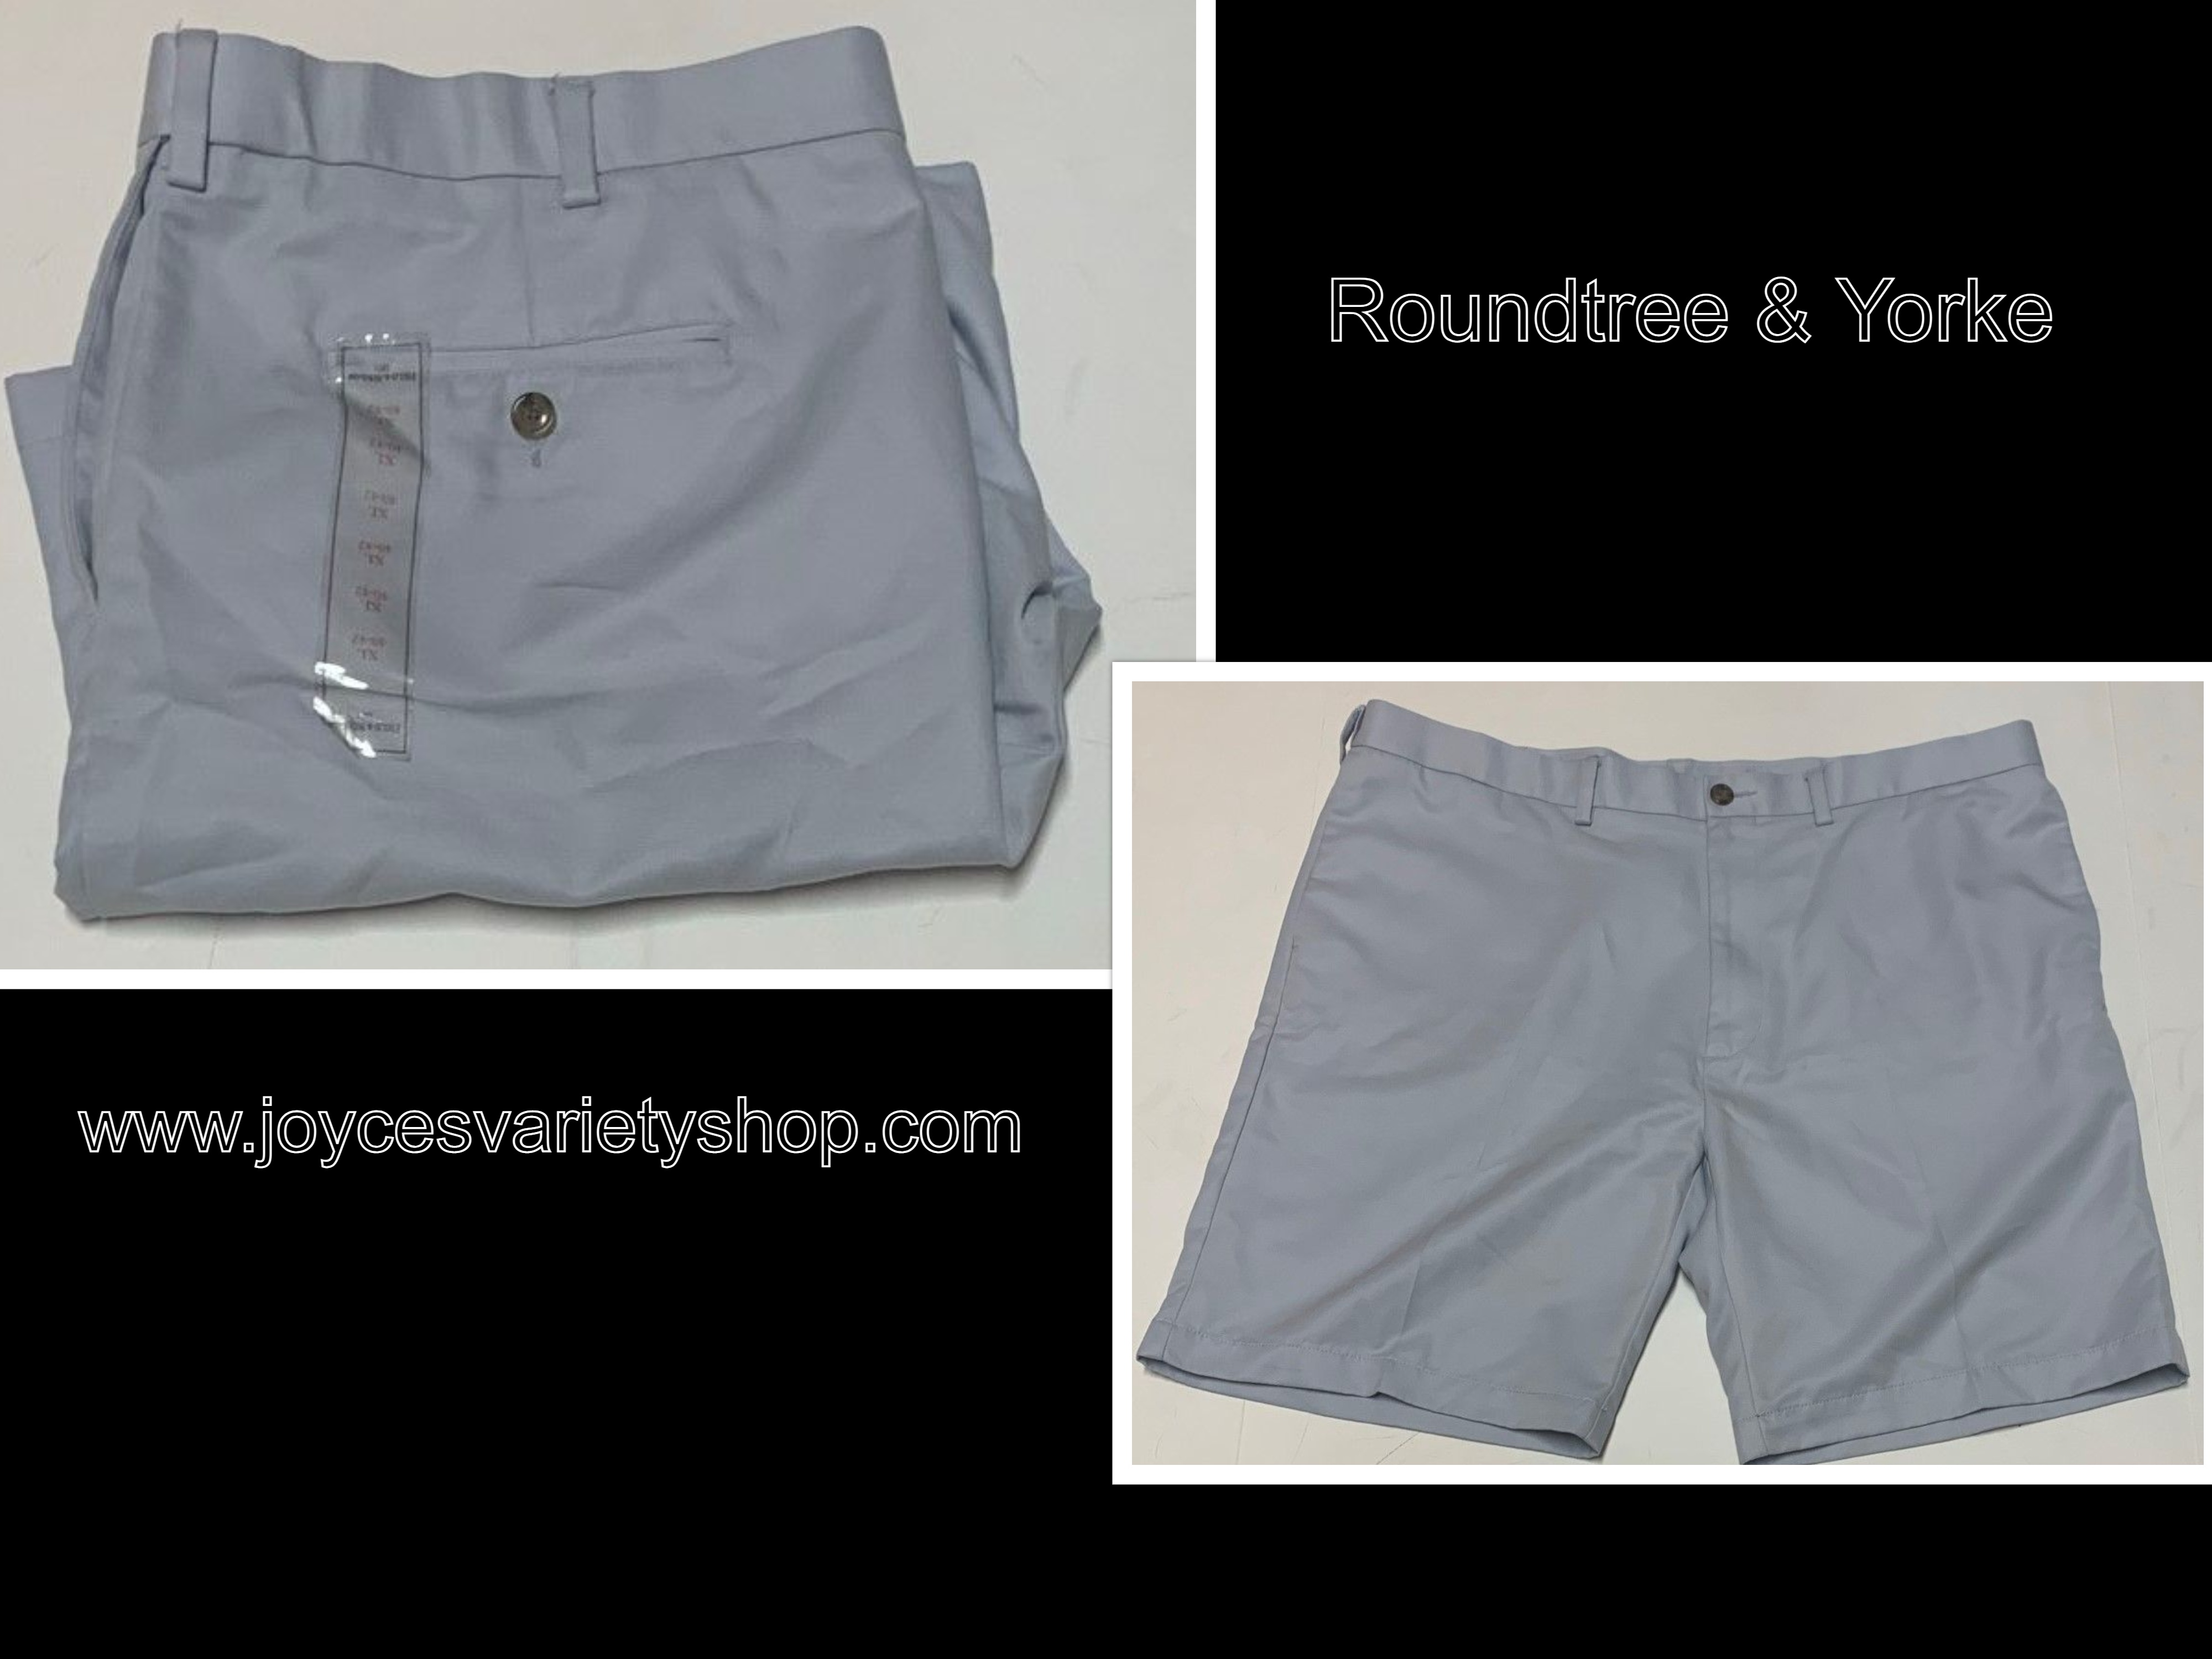 Roundtree & Yorke Men's Field & Stream Shorts SZ XL 40-42 Light Baby Blue